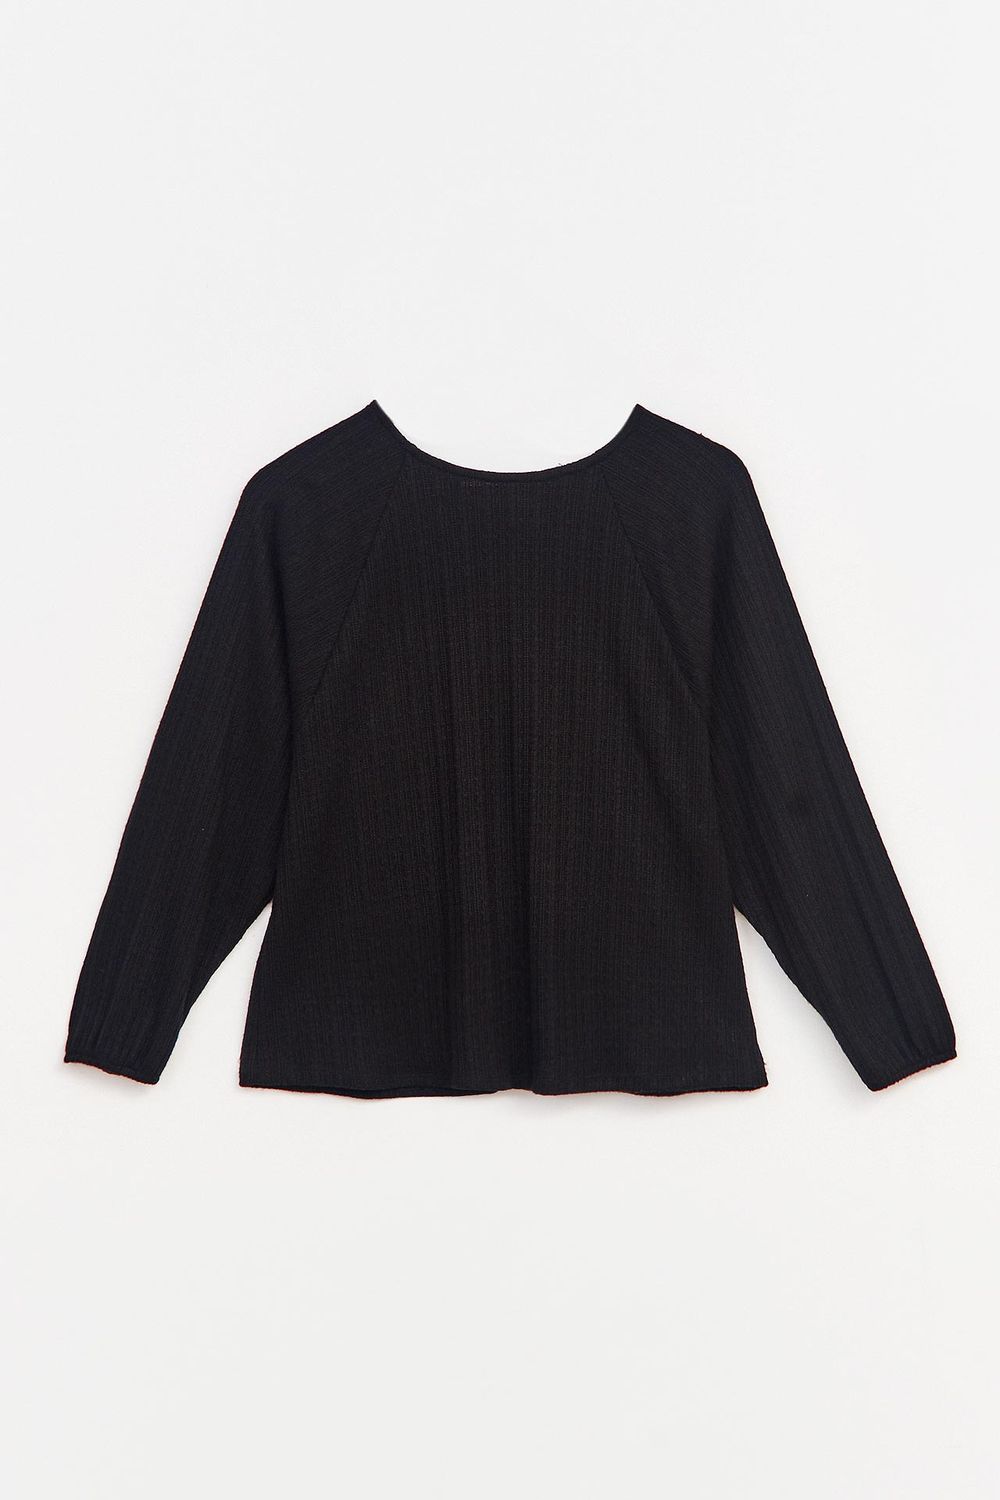 sweater-quard-negro-40